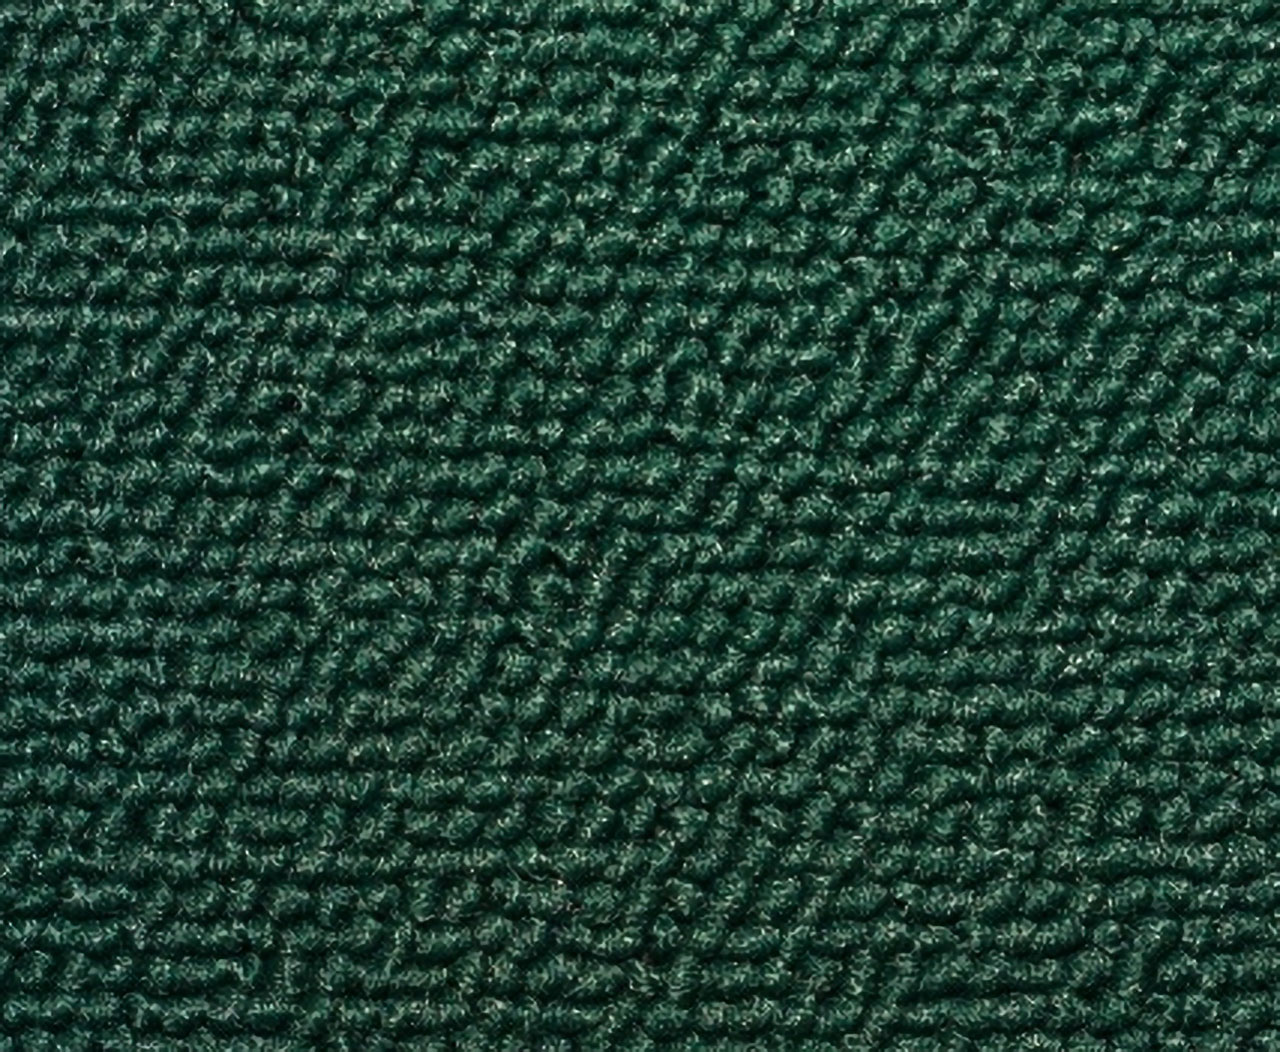 Holden Standard EJ Standard Sedan A97 Triton Green Carpet (Image 1 of 1)